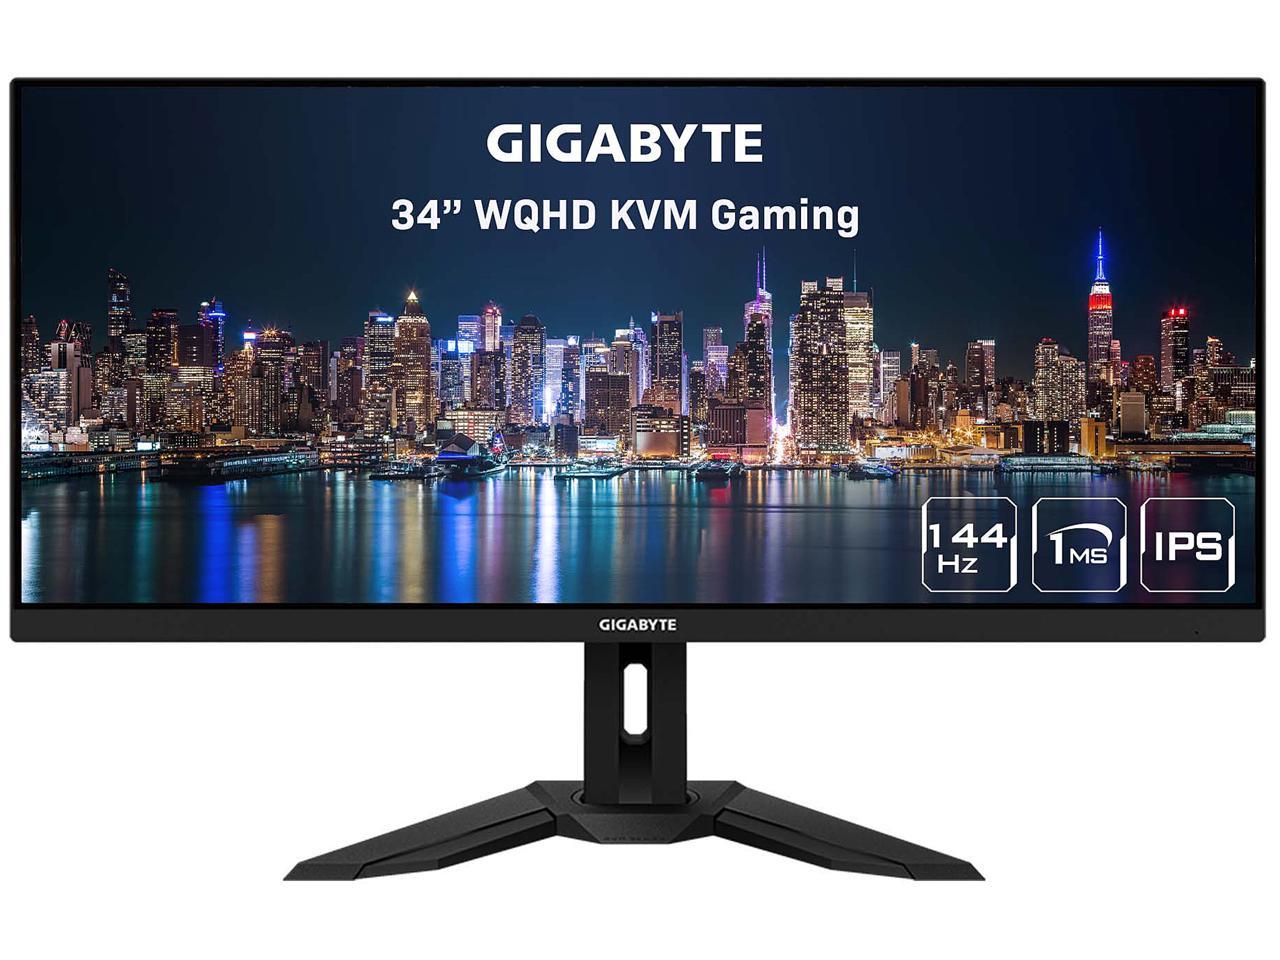 GIGABYTE M34WQ 34" 144Hz Ultrawide KVM Gaming Monitor, 3440 x 1440 IPS Display, 1ms (MPRT) Response Time, 91% DCI-P3, HDR Ready, 1x Display Port 1.4, 2x HDMI 2.0, 2x USB 3.0, 1x USB Type-C